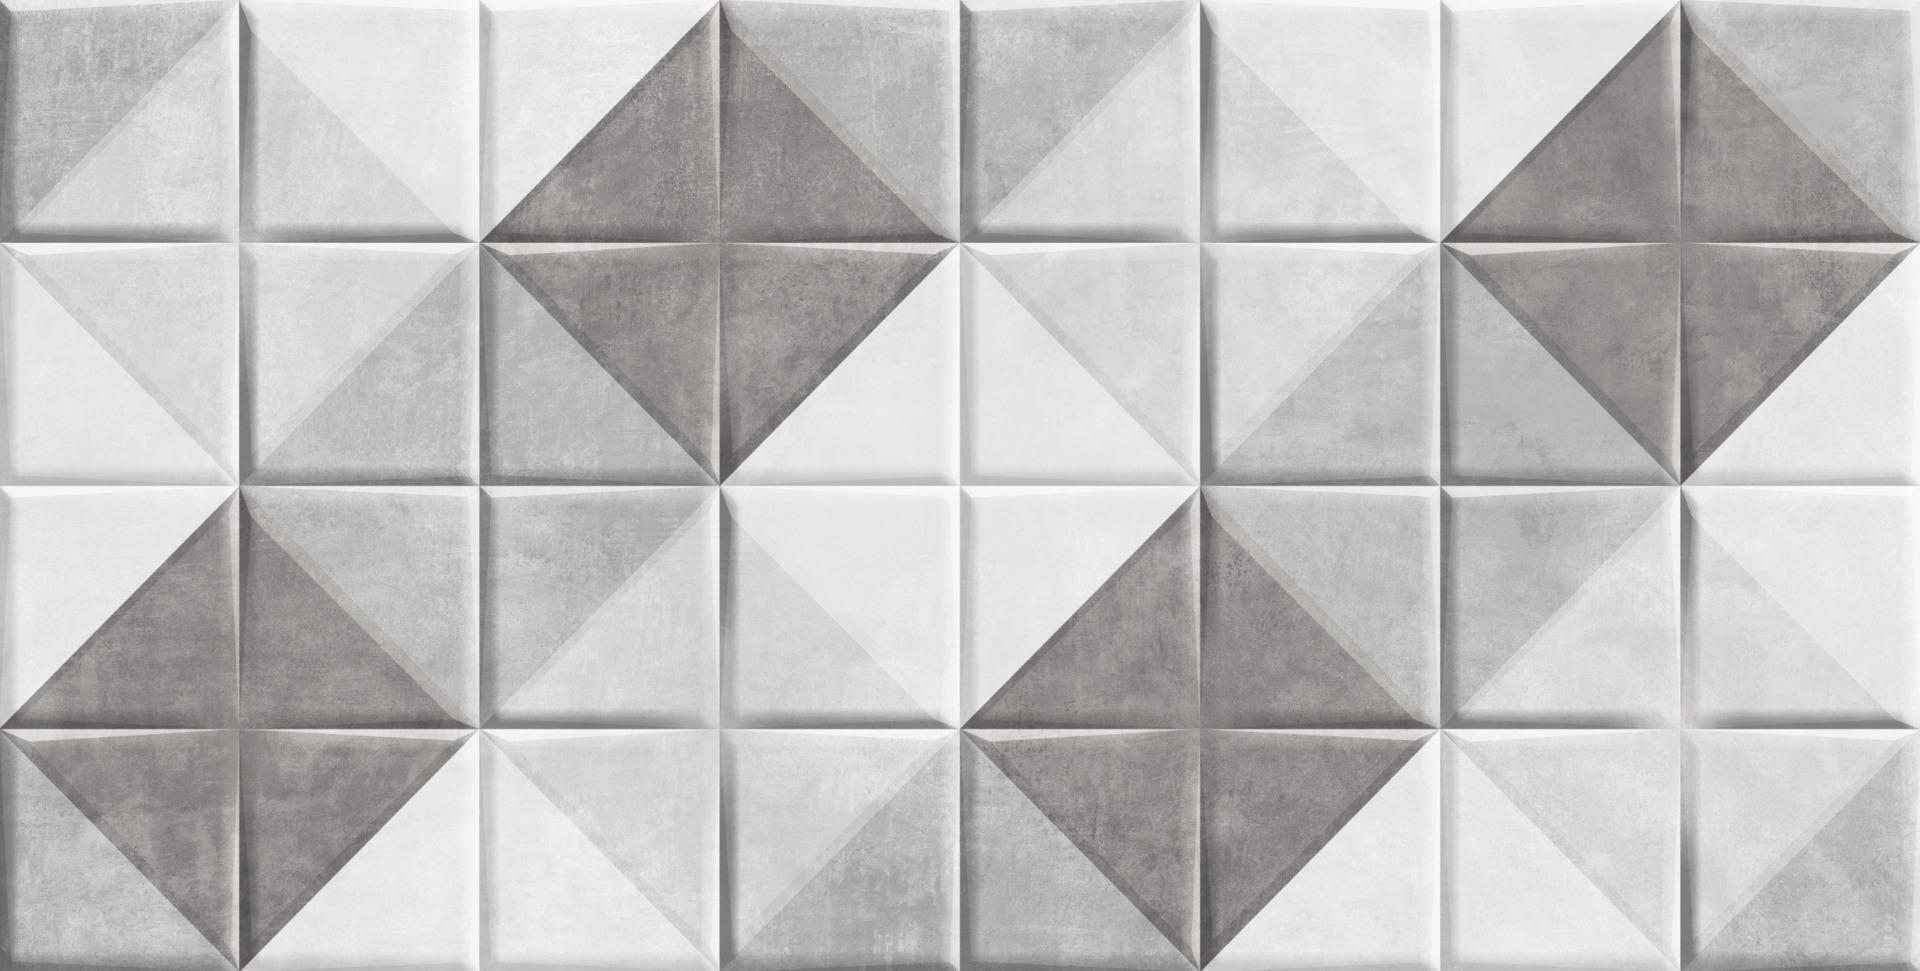 All Tiles for Bathroom Tiles, Living Room Tiles, Kitchen Tiles, Bedroom Tiles, Accent Tiles, Automotive Tiles, Bar/Restaurant, Commercial/Office